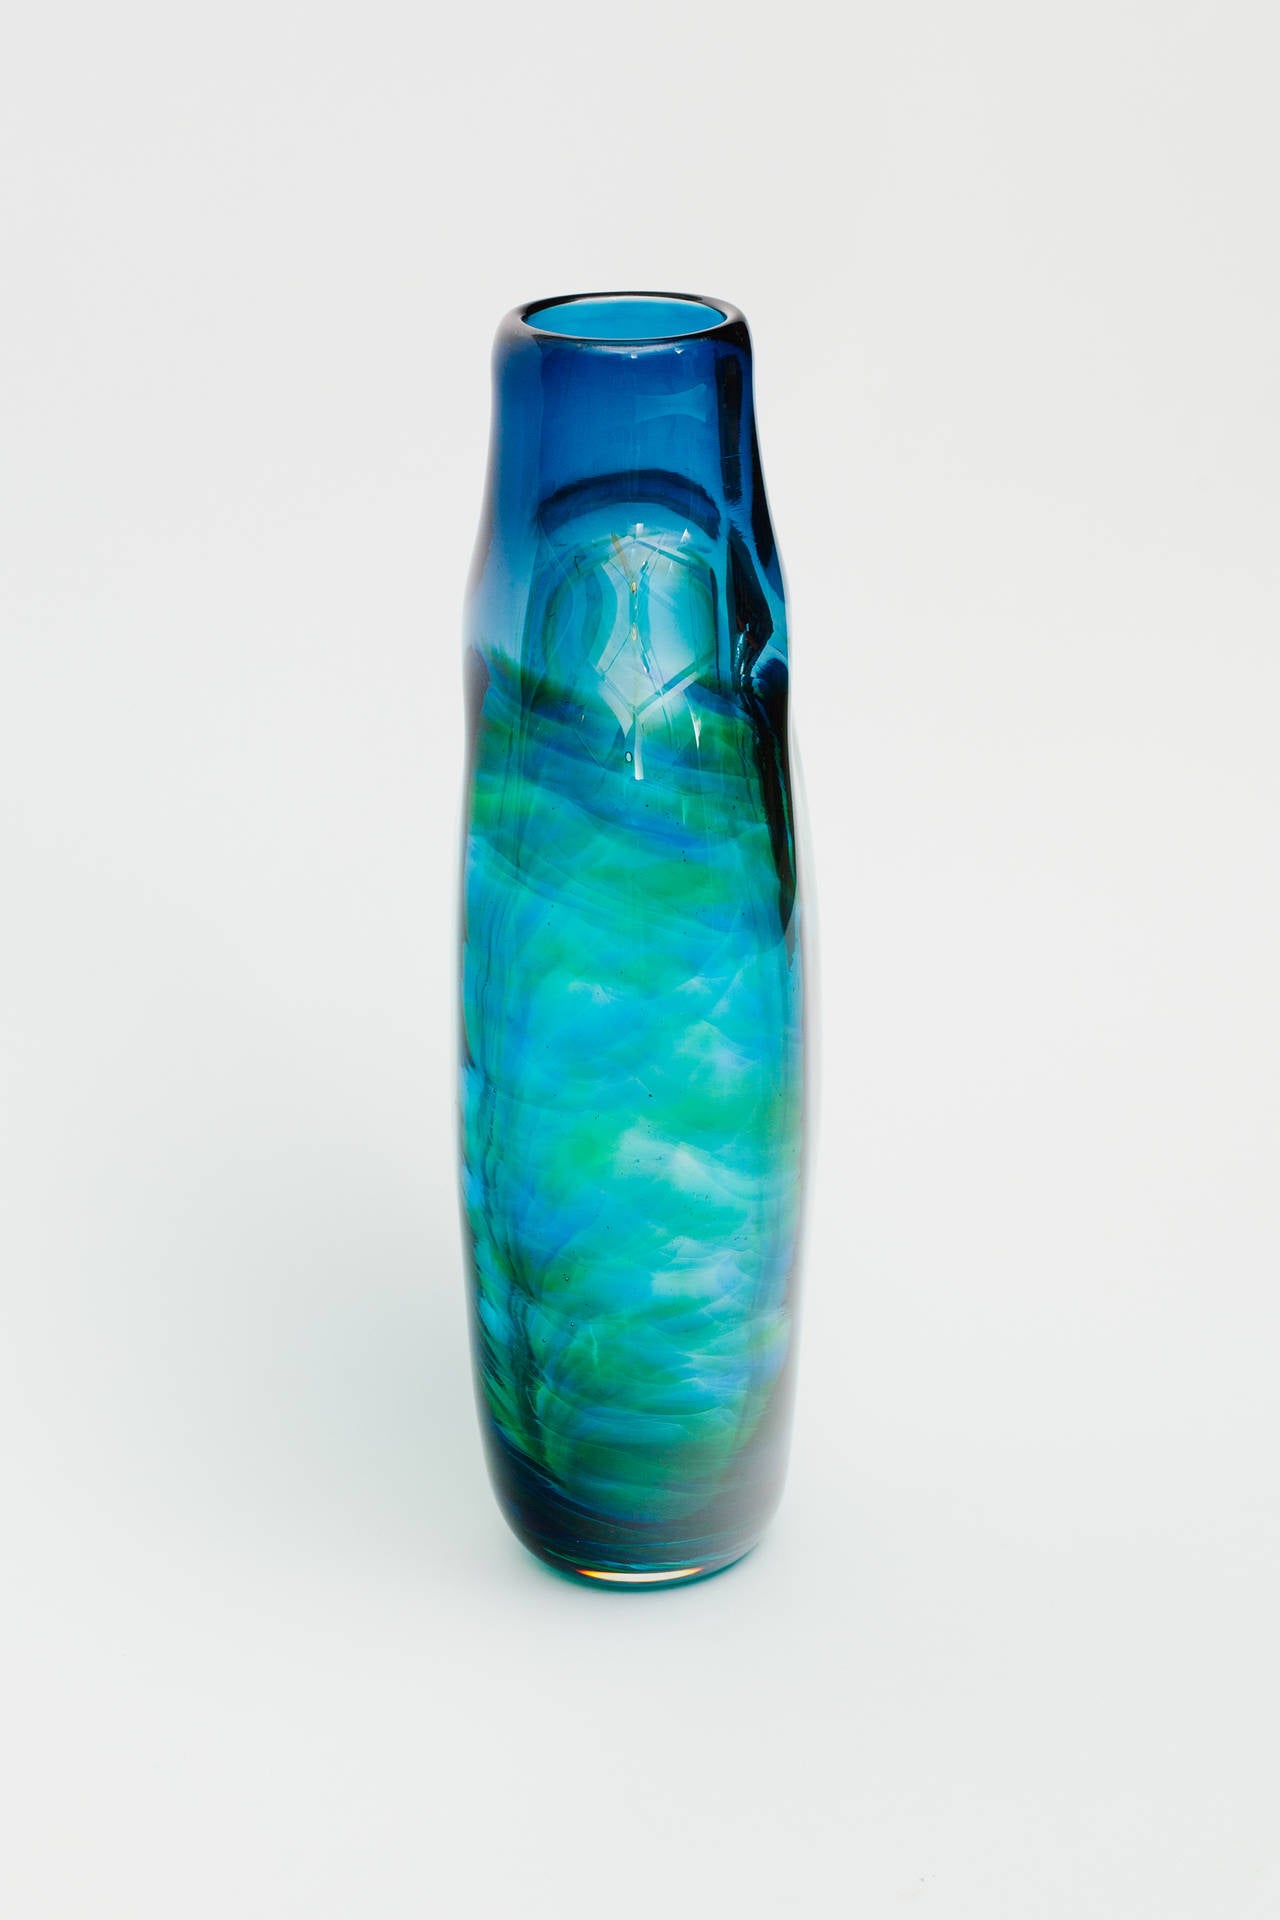 Vibrant blue blown glass bottle shape vase .